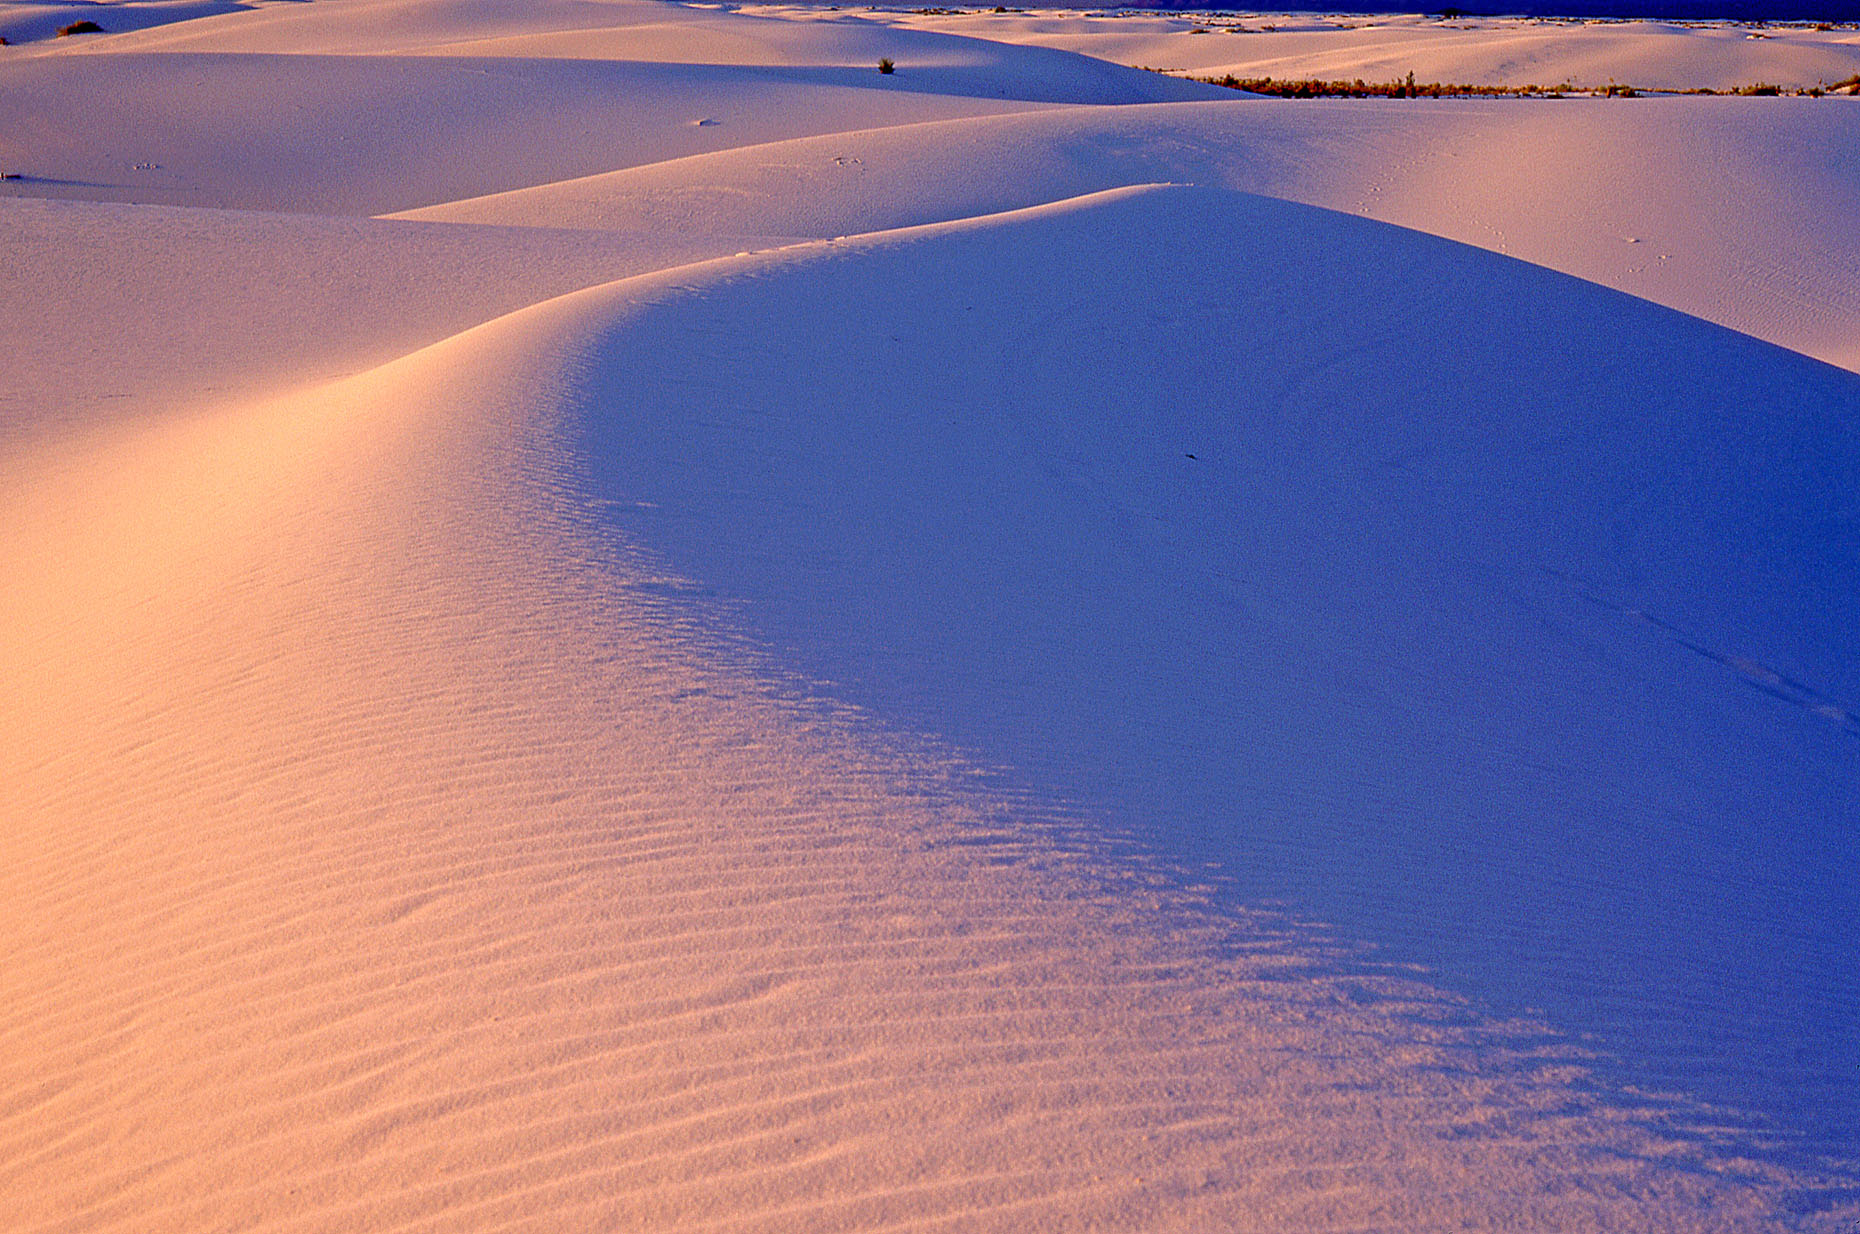 Gypsum dunes, White Sands National Monument, John Annerino, NM